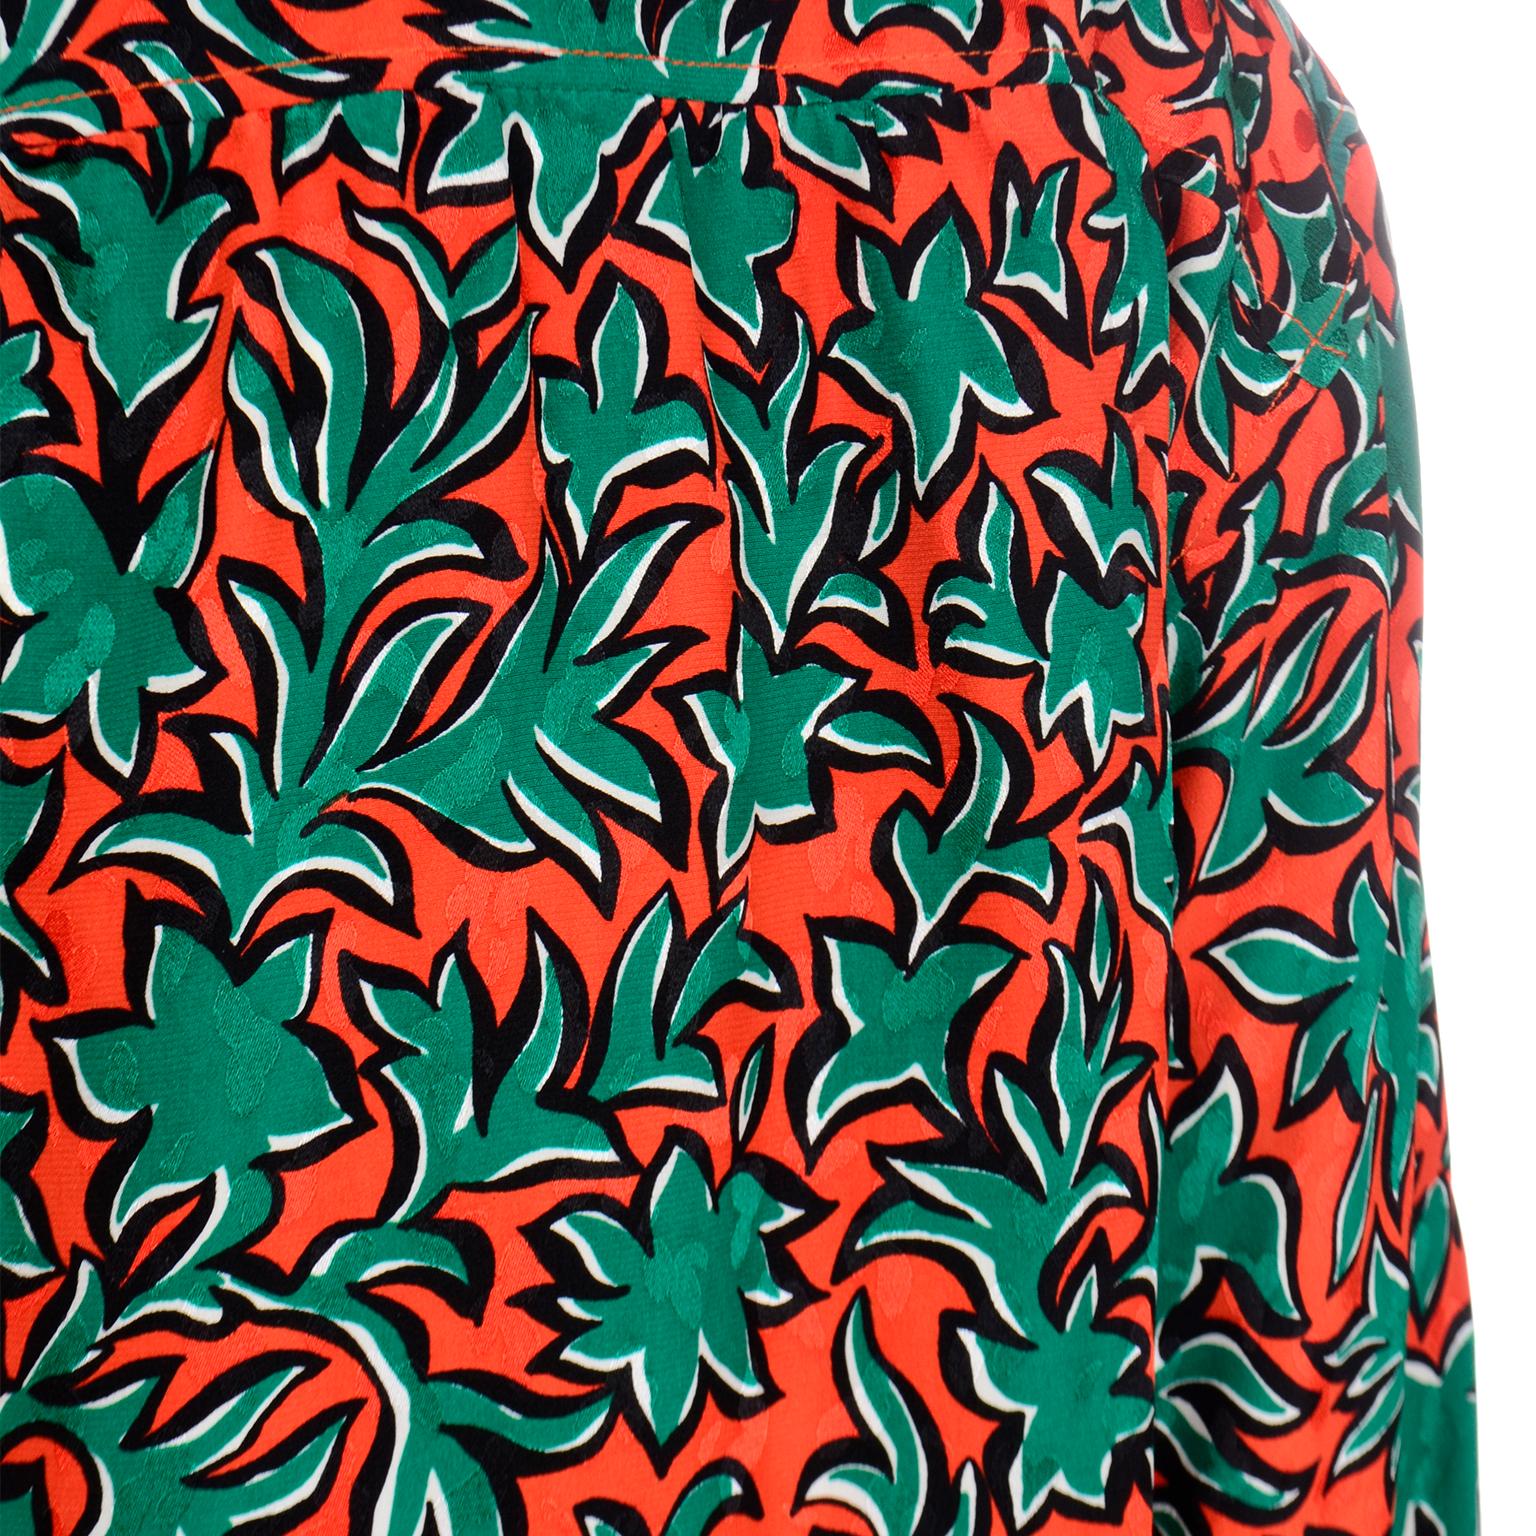 Yves Saint Laurent Orange & Green Leaf Print Blouse With Bow Sash For Sale 5